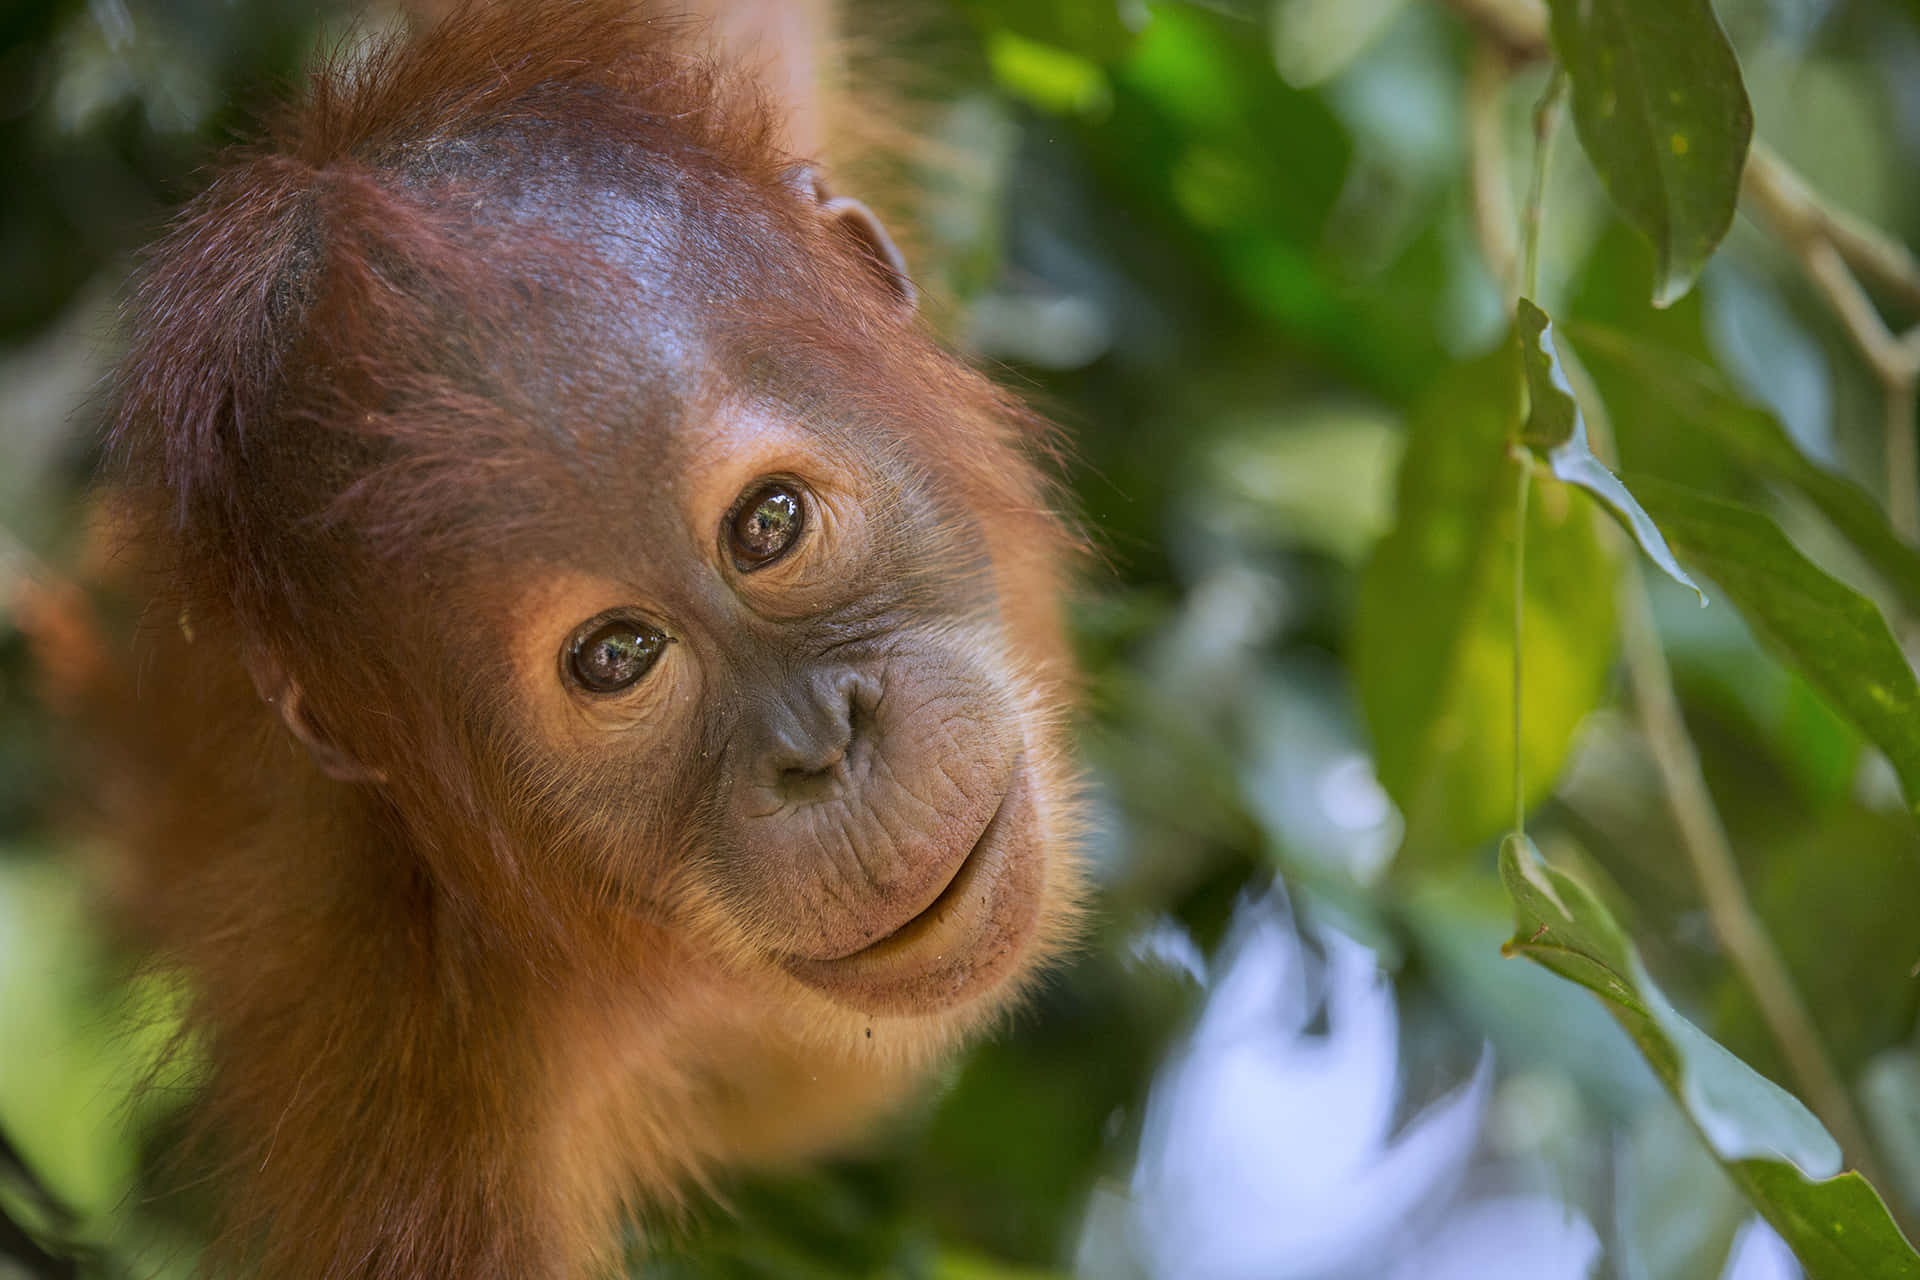 A Close Portrait of an Orangutan